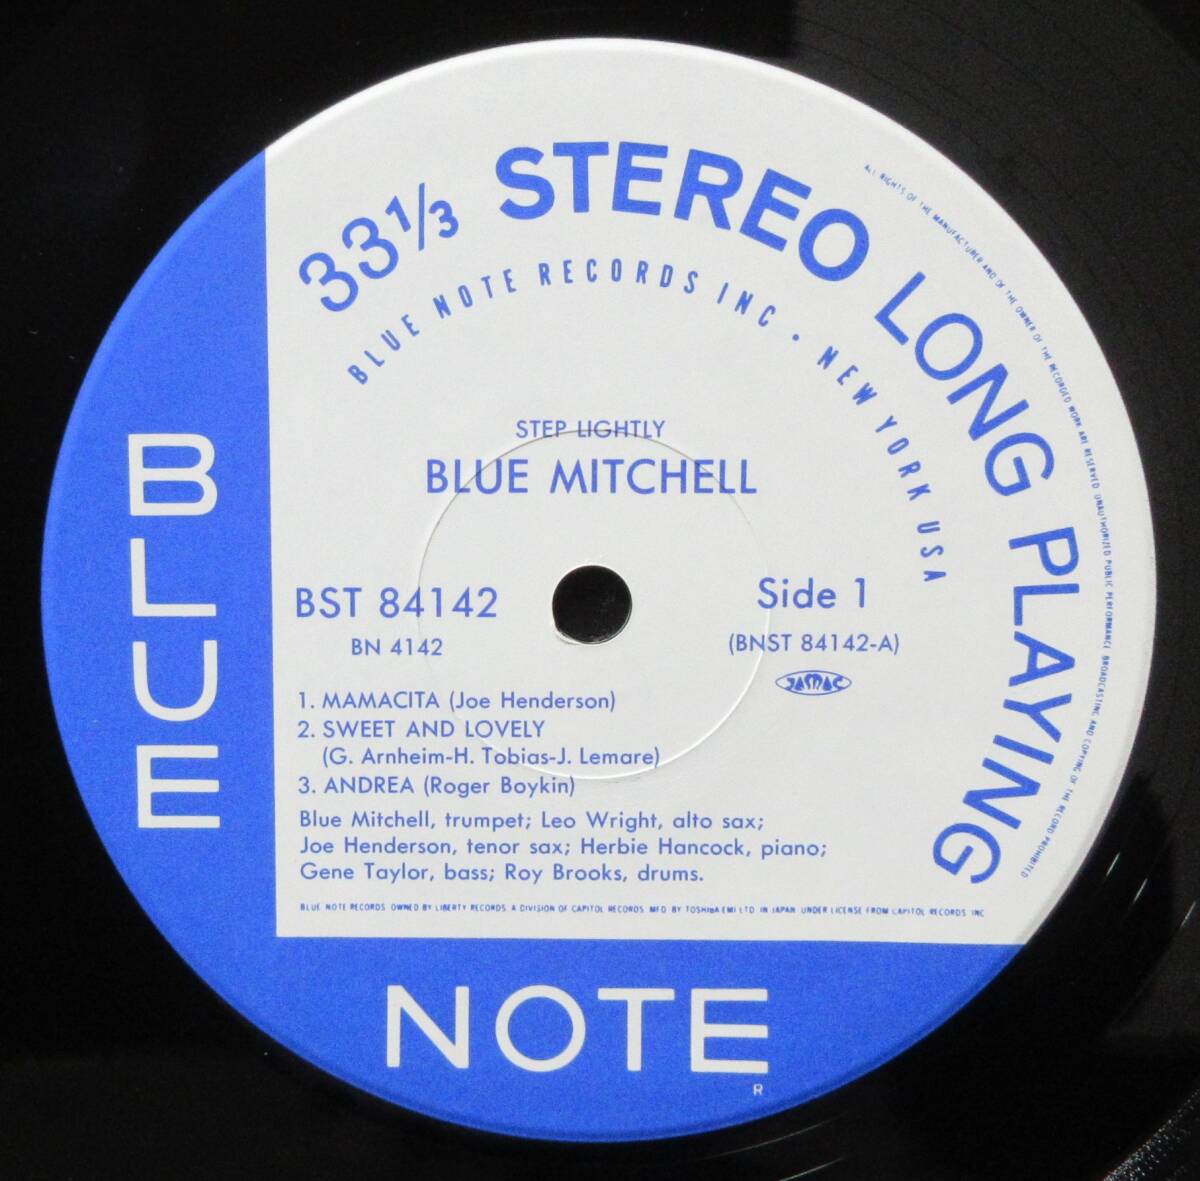 (LP) 美品! BLUE NOTE(東芝) BLUE MITCHELL [STEP LIGHTLY] 4000番台ウルトラコレクション/ブルーミッチェル/Joe Henderson/1993年/BN 4142_画像4